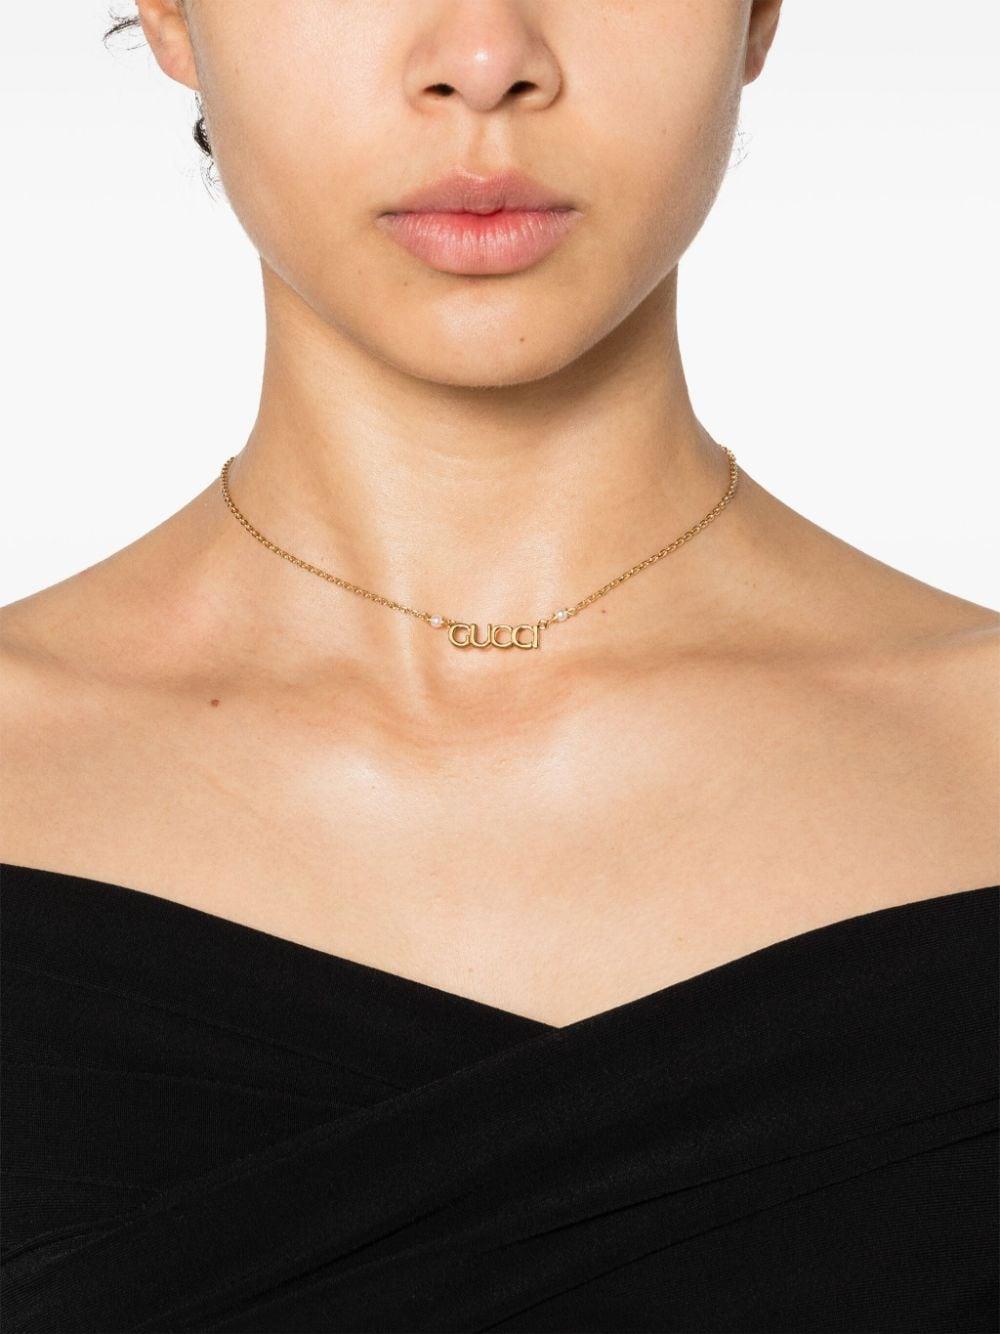 Gucci Script pendant necklace - Gold